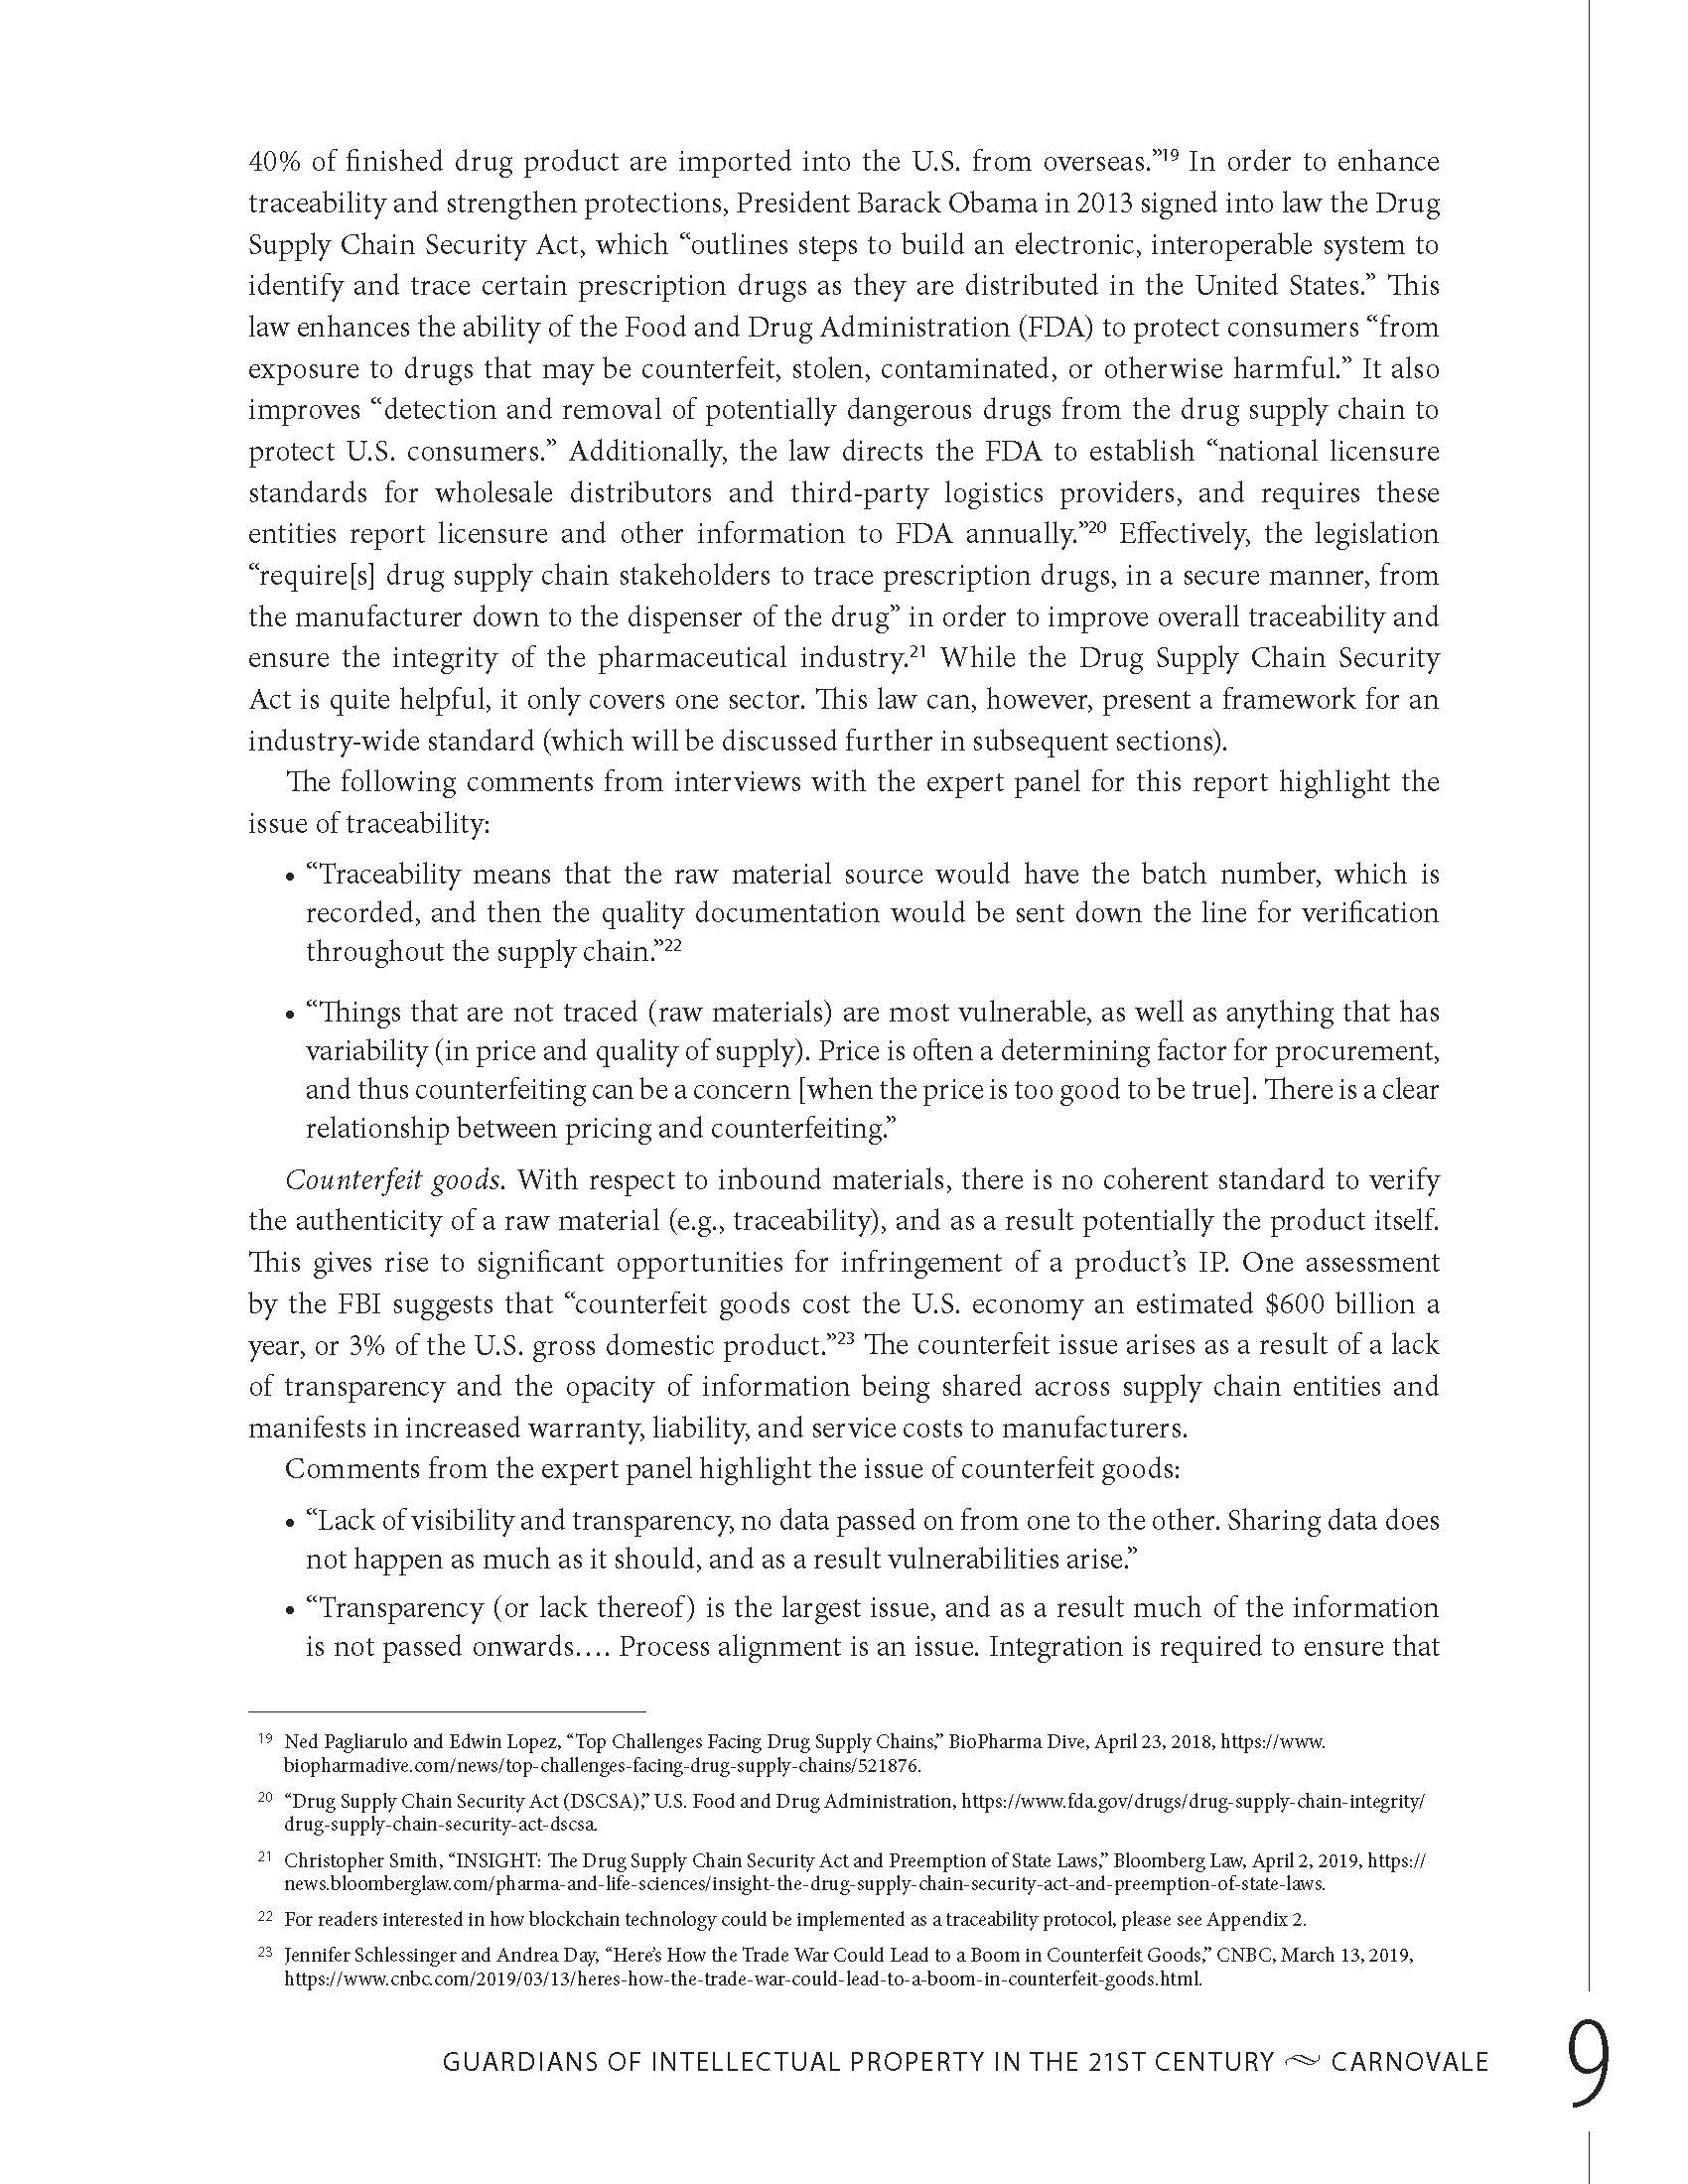 NBR21世纪知识产权的守护者-全球供应链行业英文版44页_页面_16.jpg